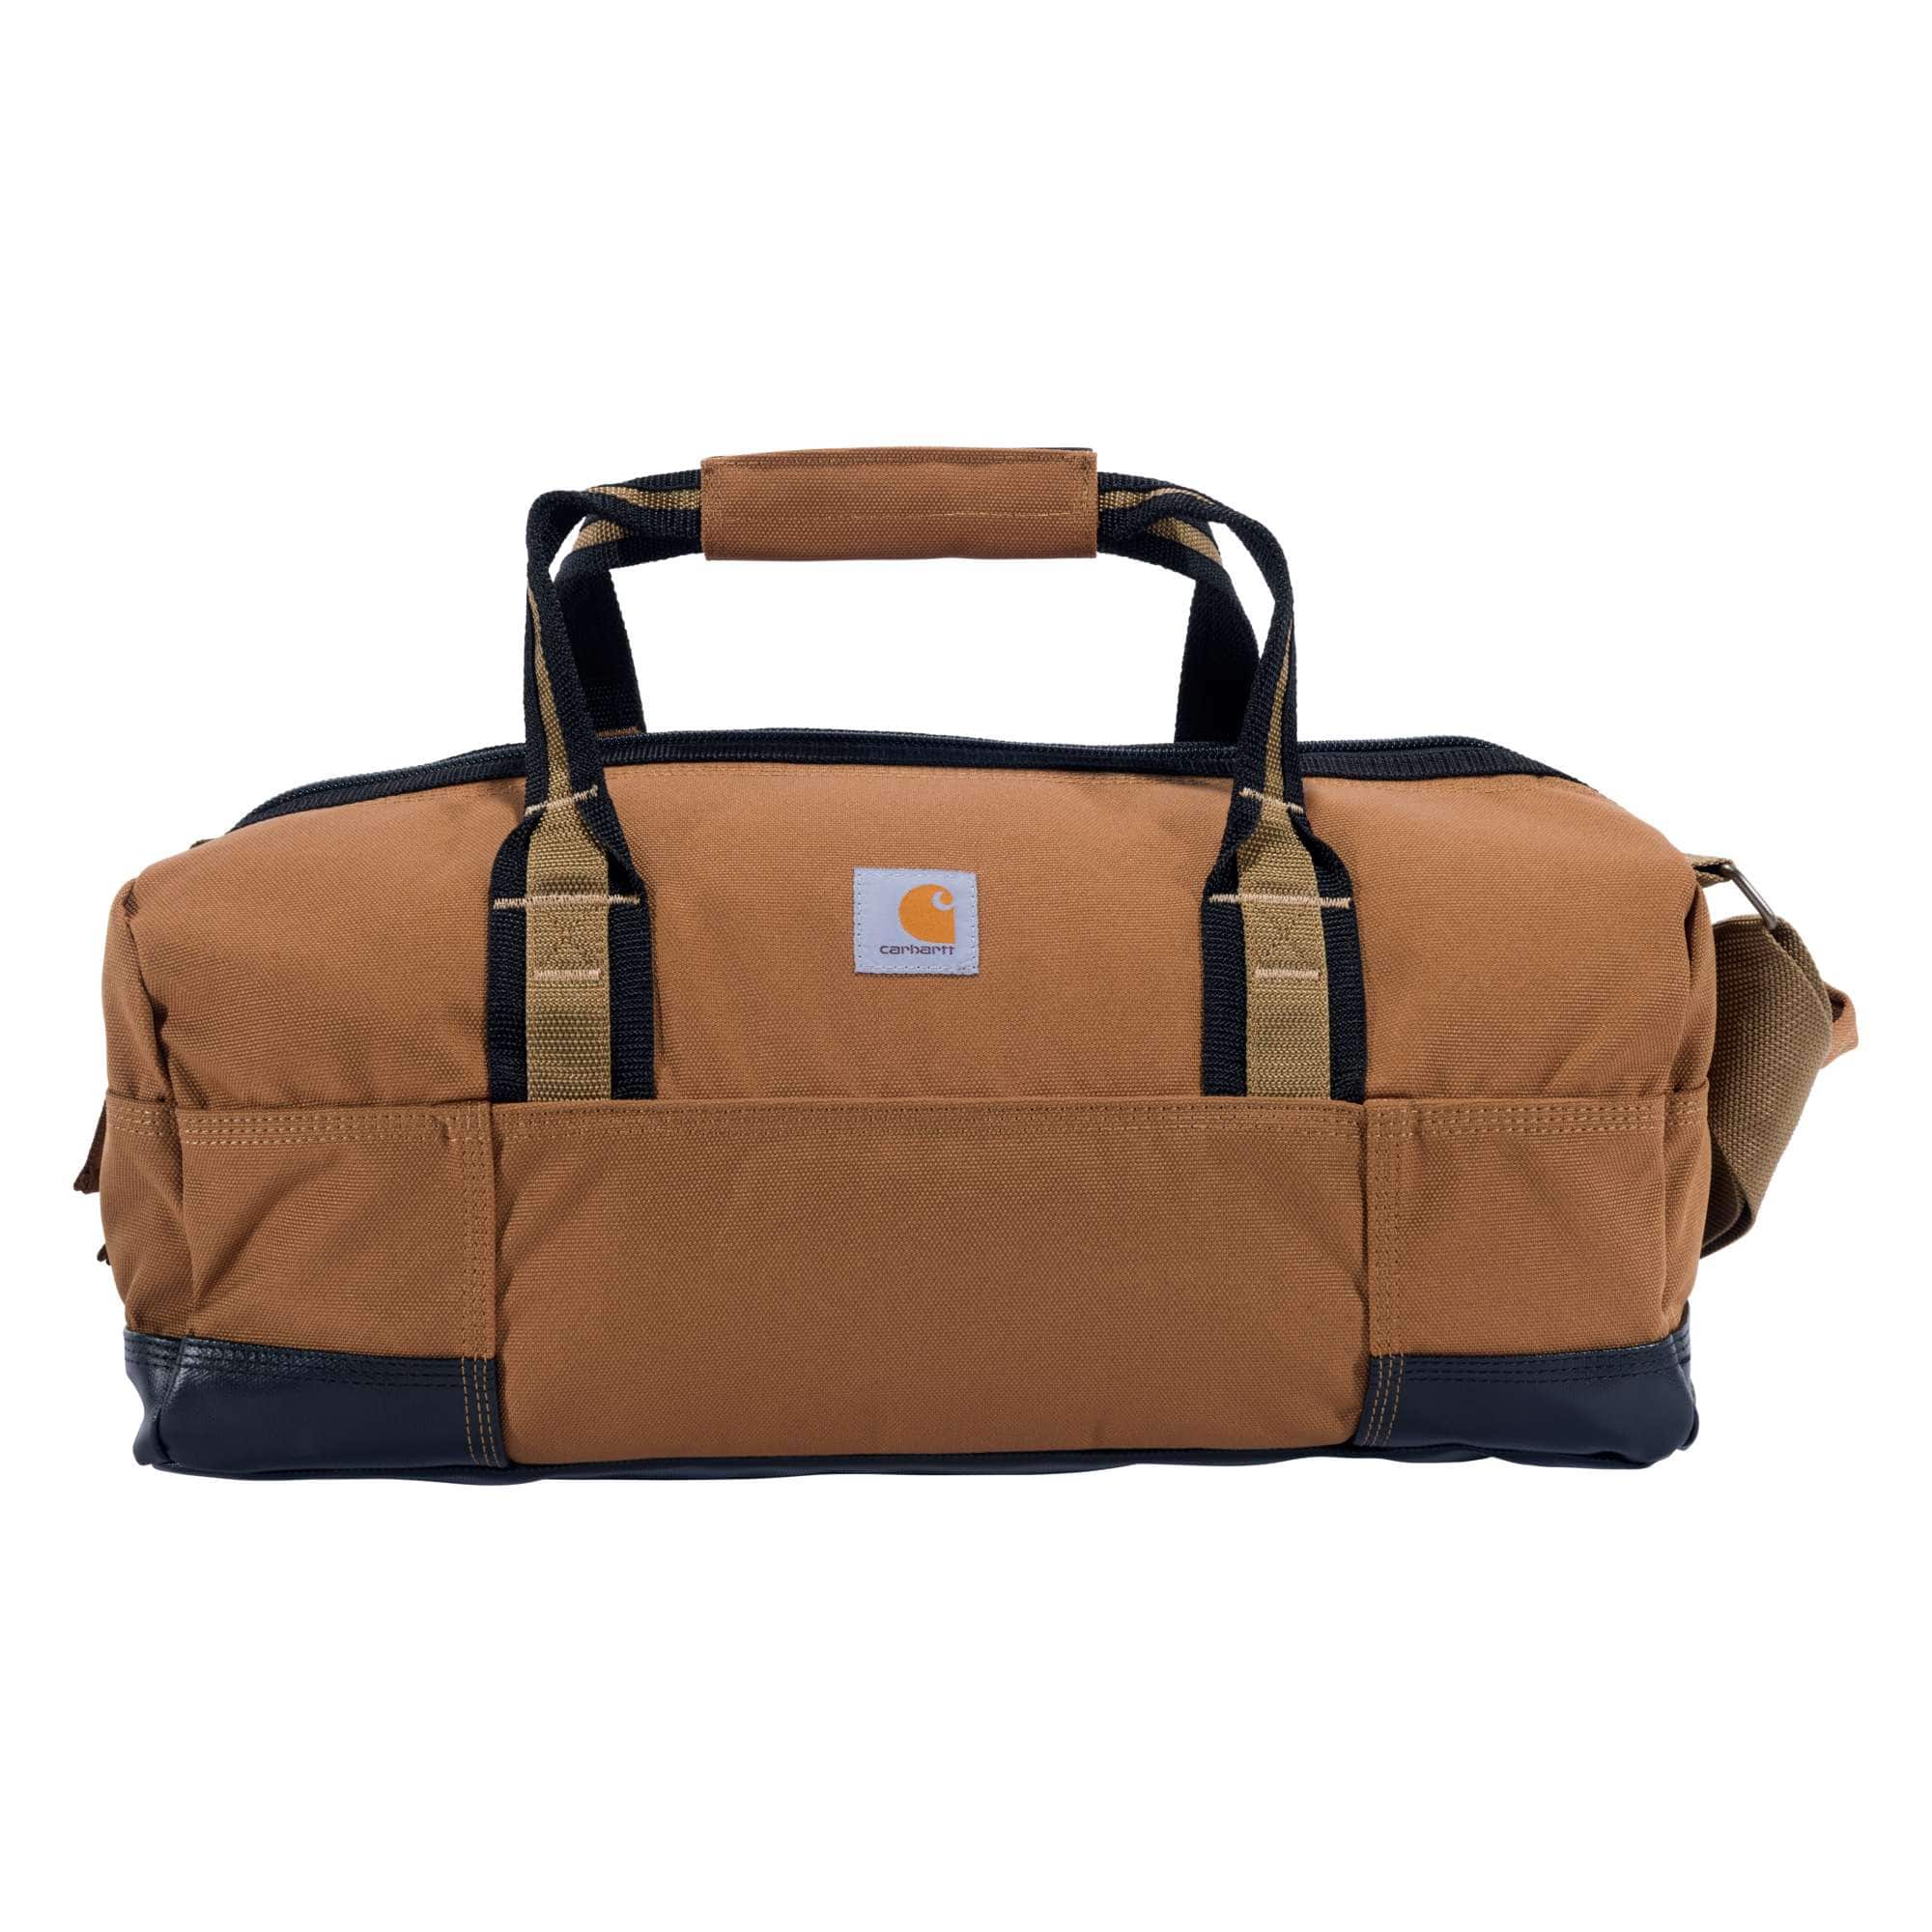 Customizable Gear Bags for Work | Carhartt Company Gear